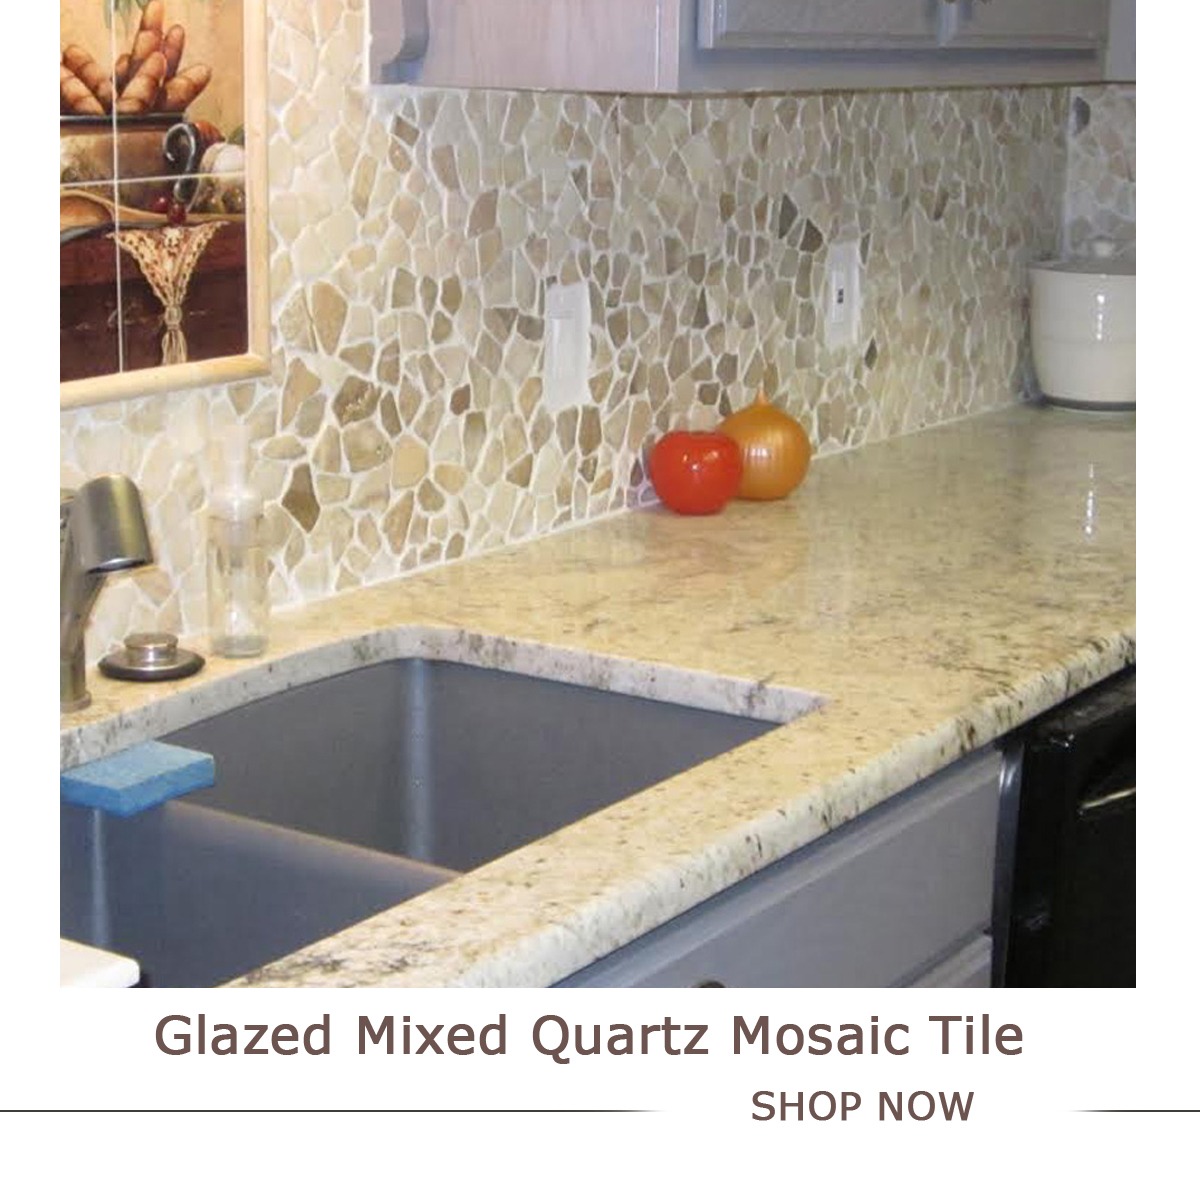  Glazed Mixed Quartz Mosaic Tile